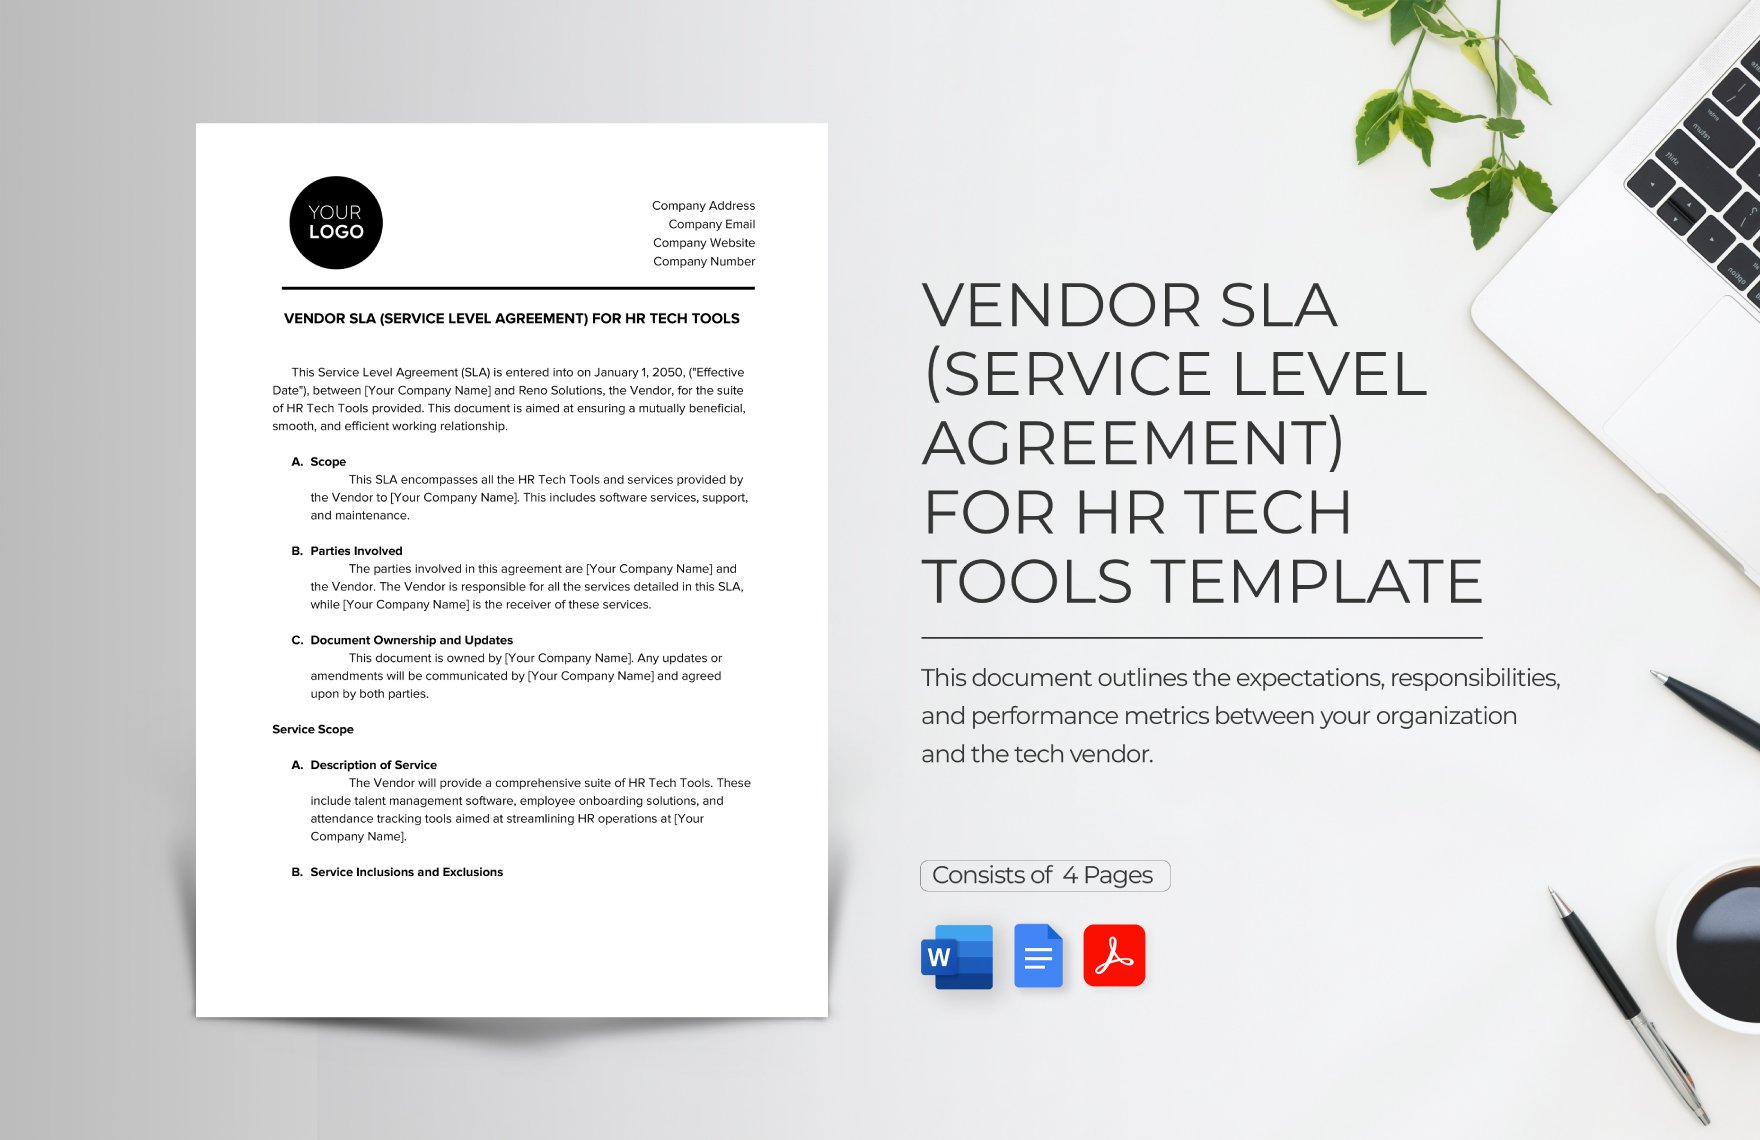 Vendor SLA (Service Level Agreement) for HR Tech Tools Template